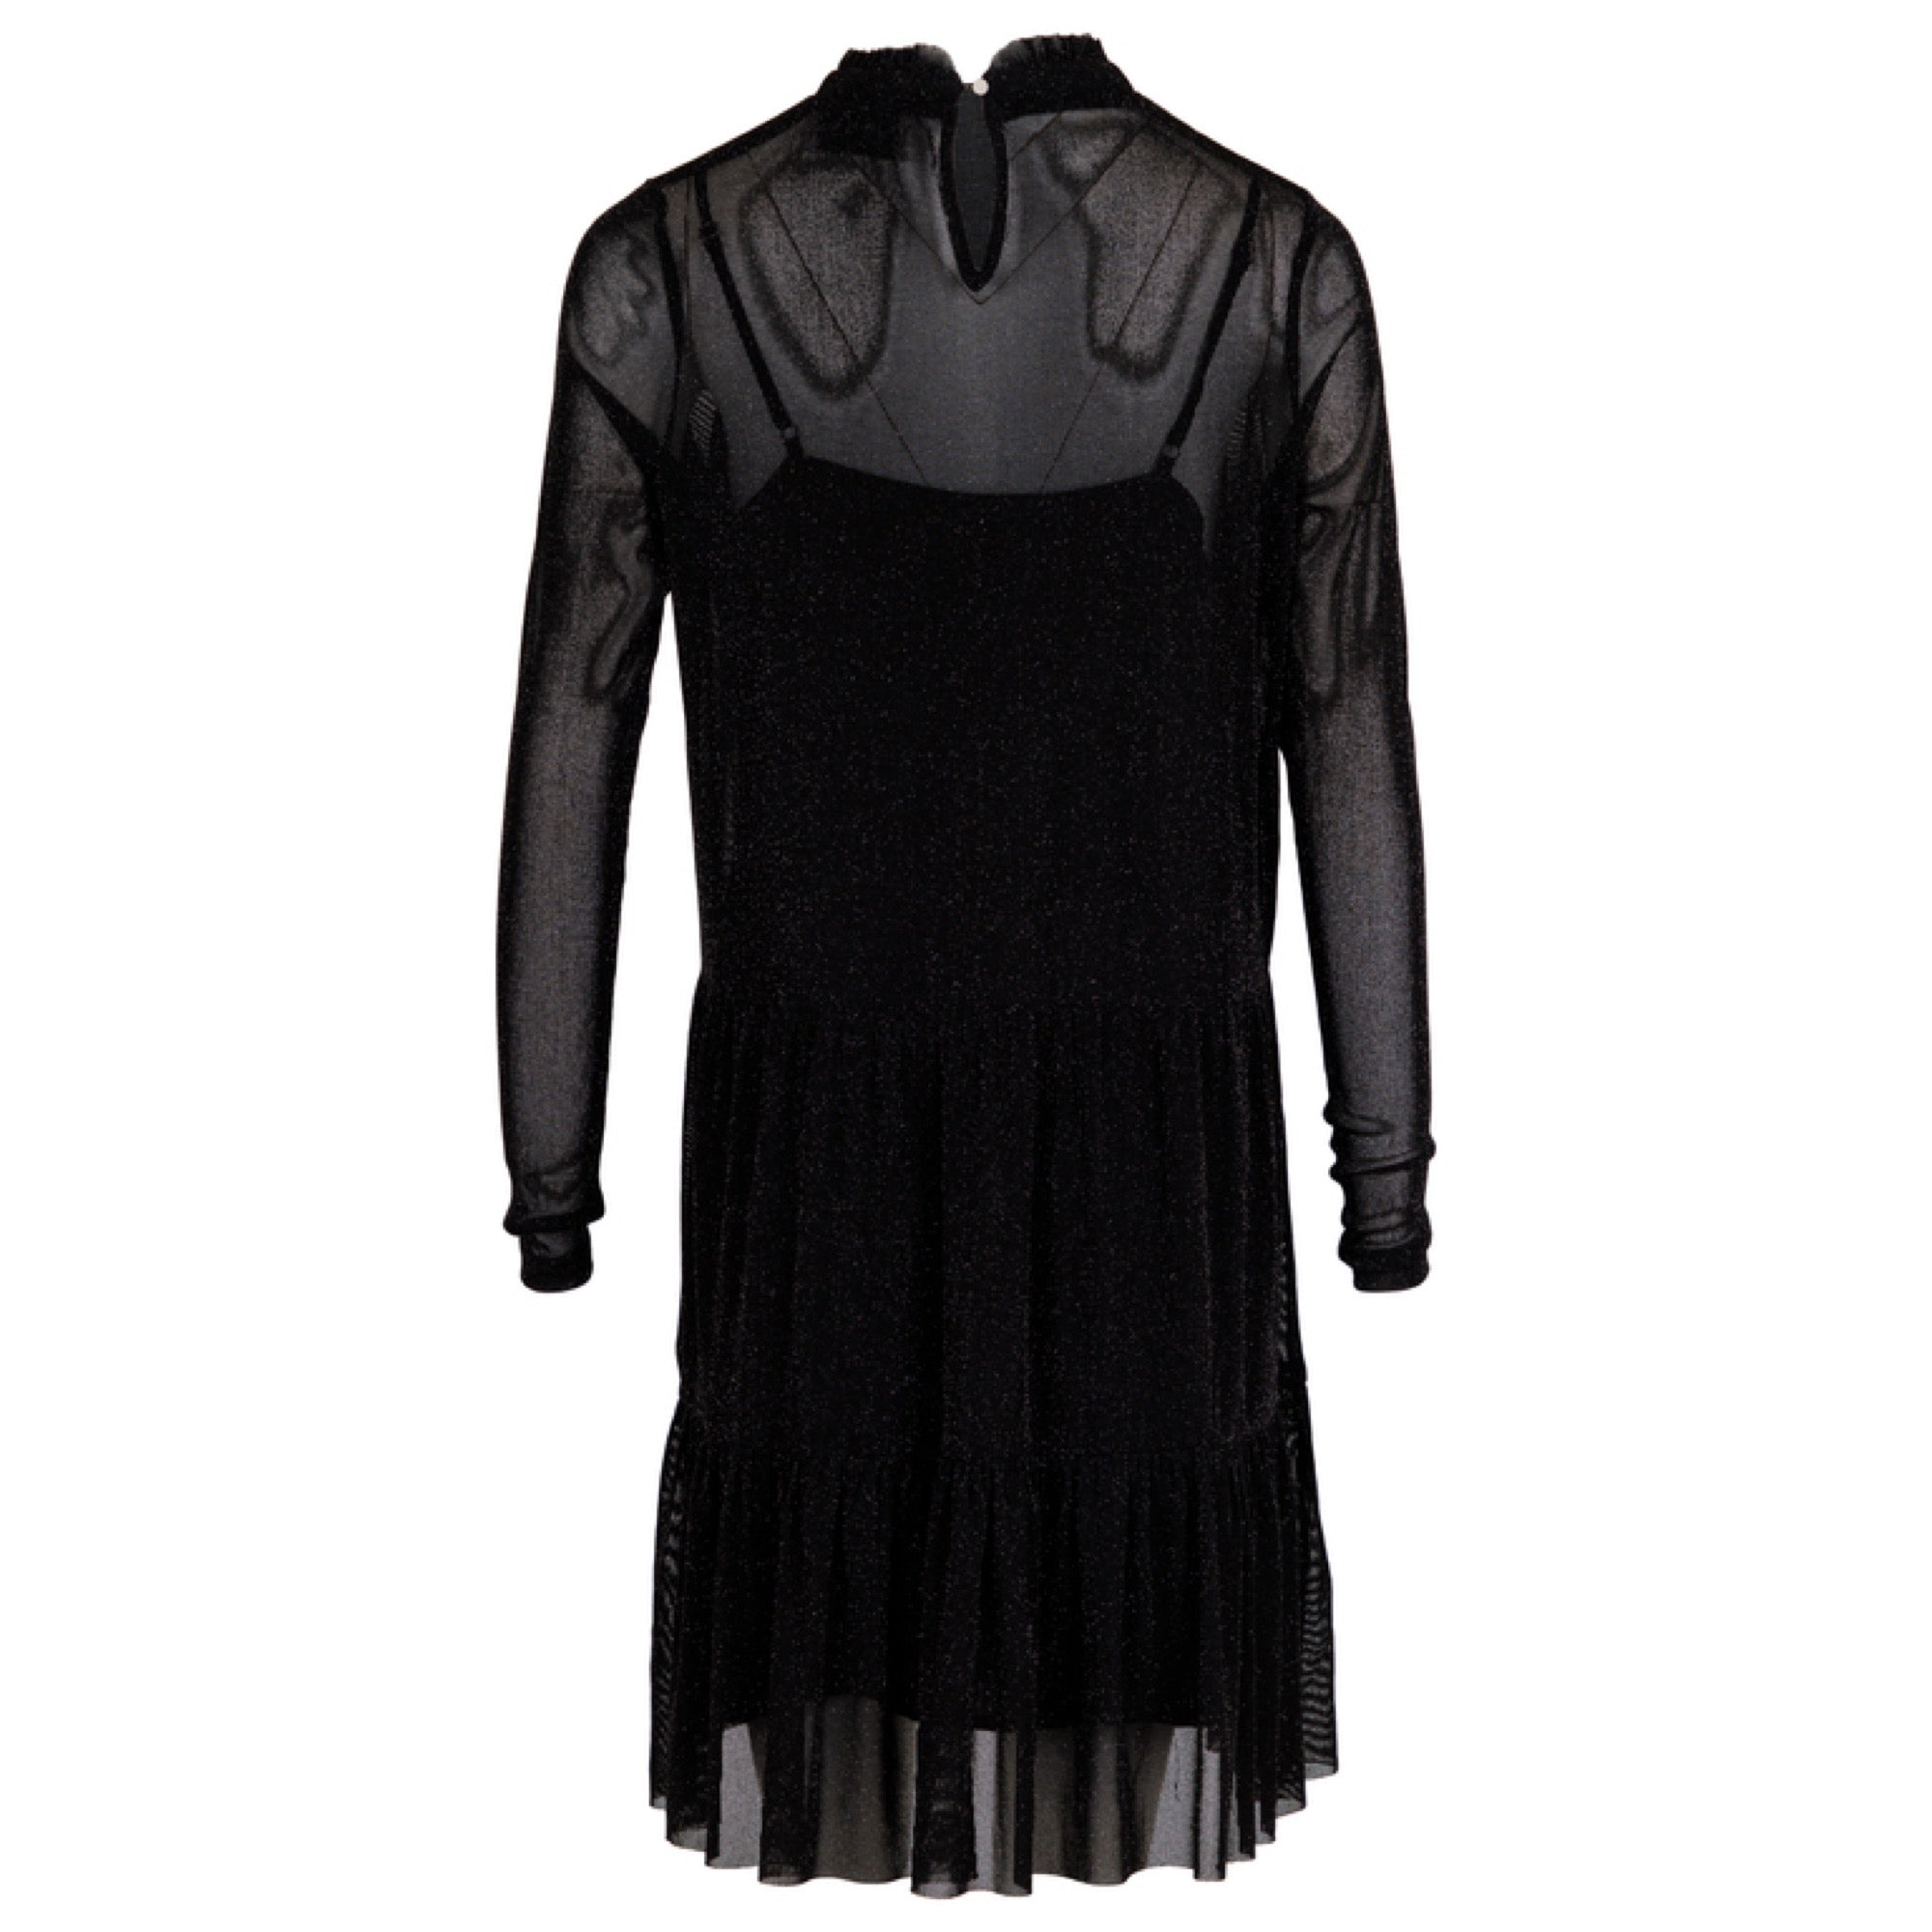 Kala Mesh Dress - Black - Neo Noir - Kjoler - VILLOID.no